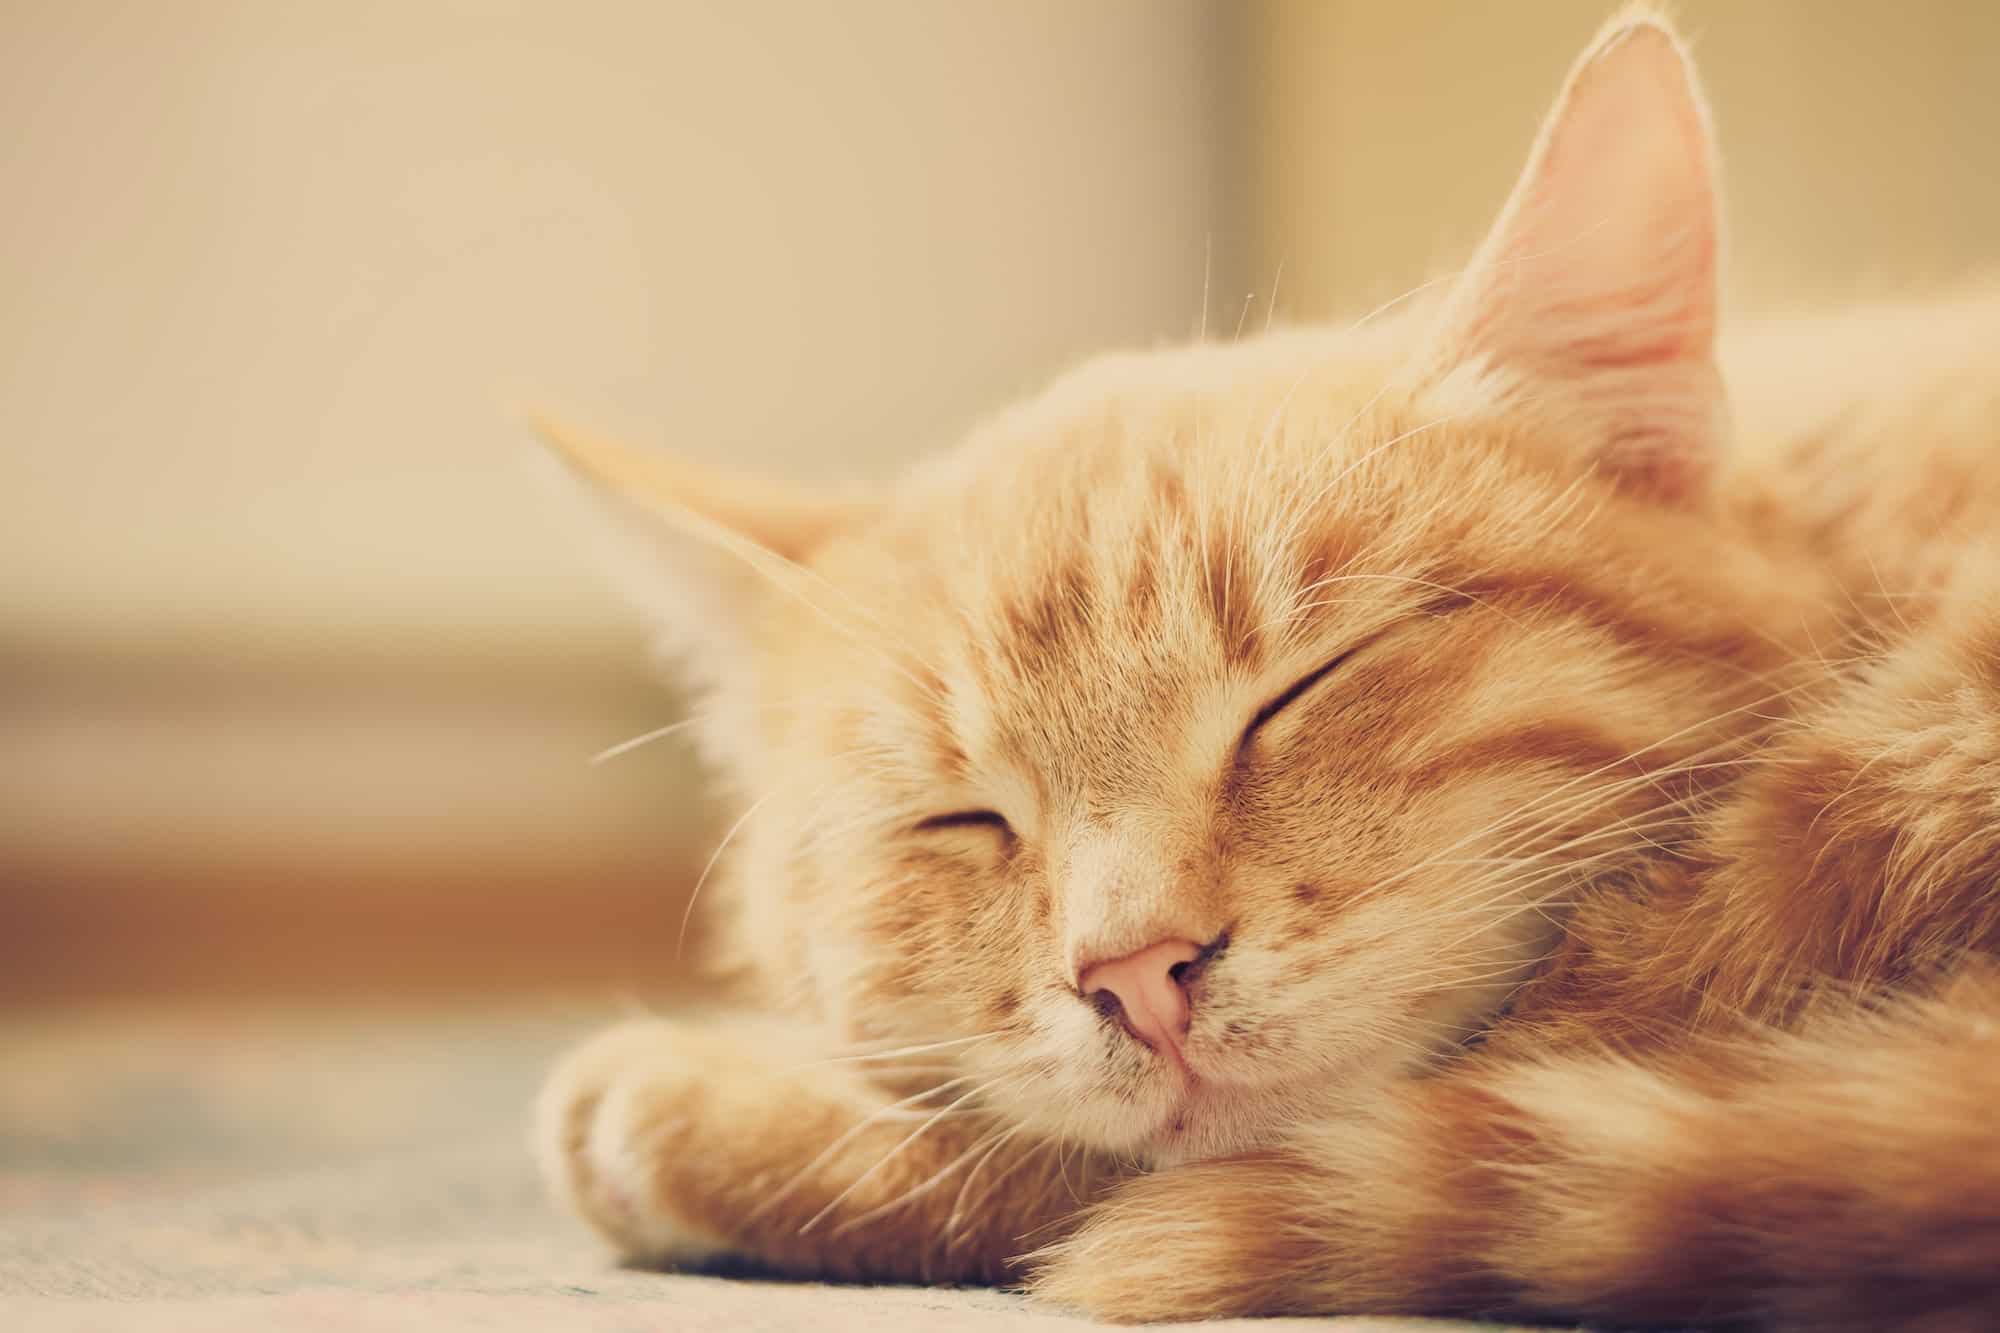 Ginger cat peaceful orange tabby male kitten curled up sleeping.